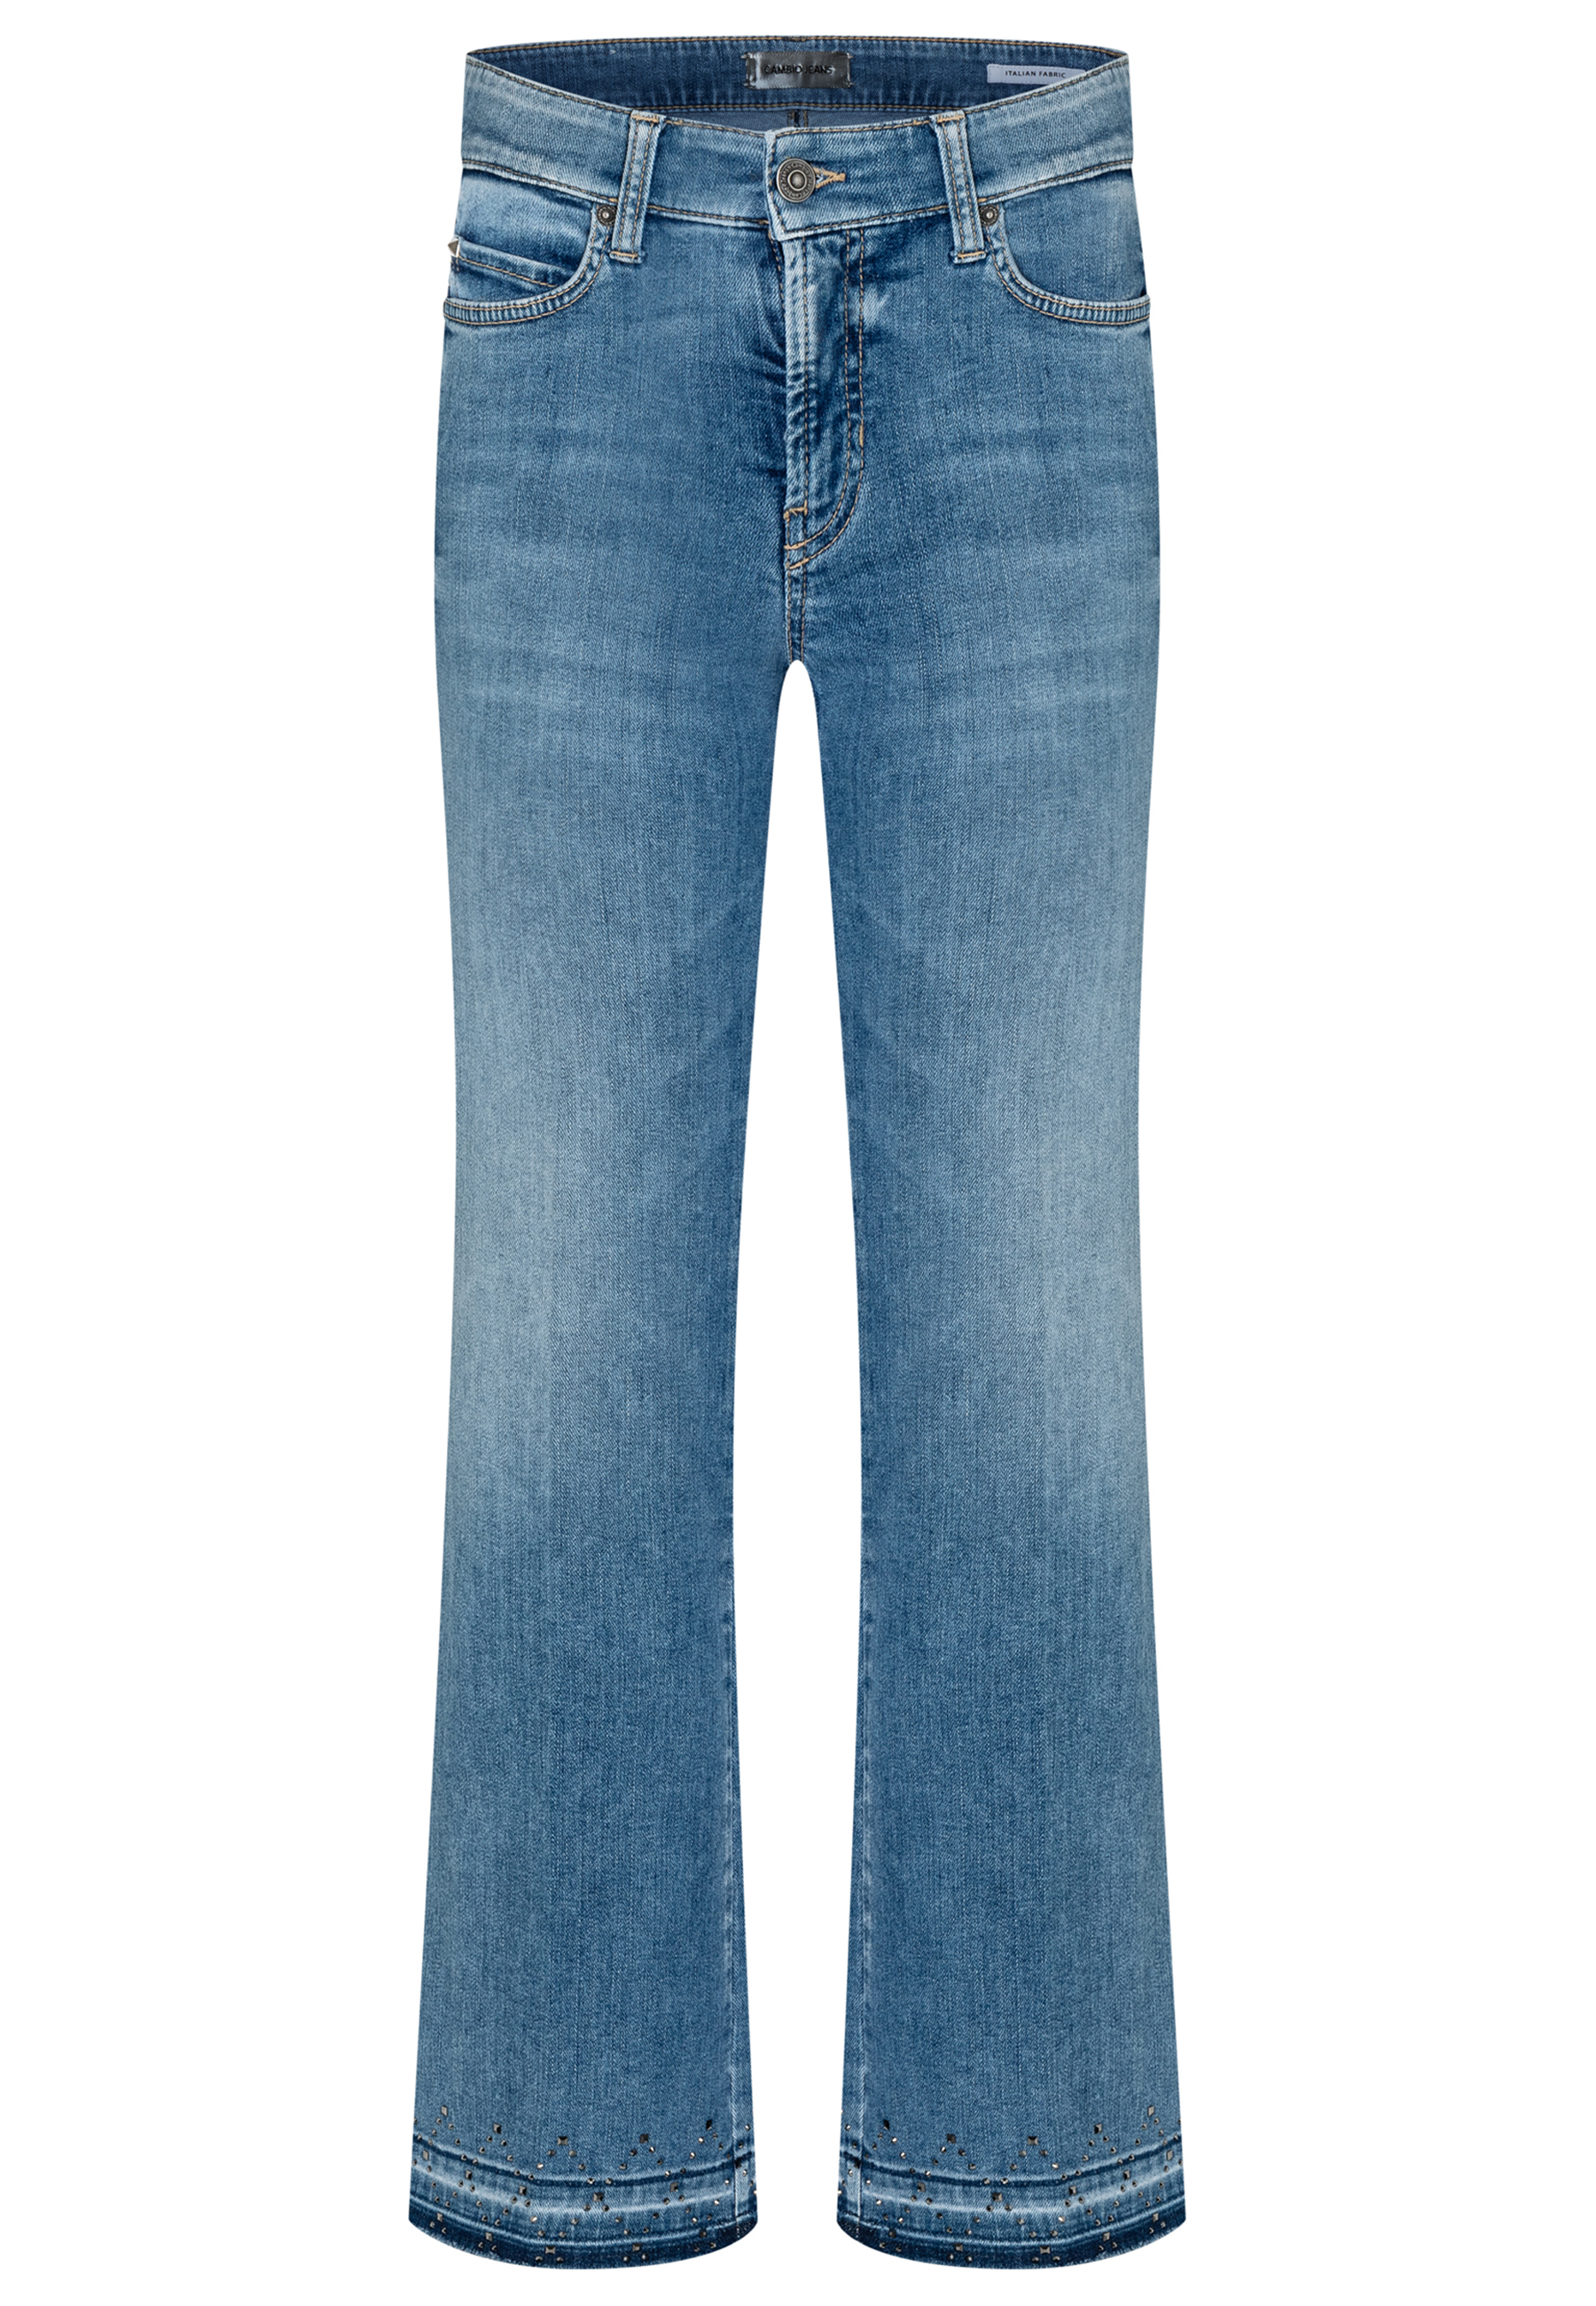 Jeans Blauw Francesca jeans blauw